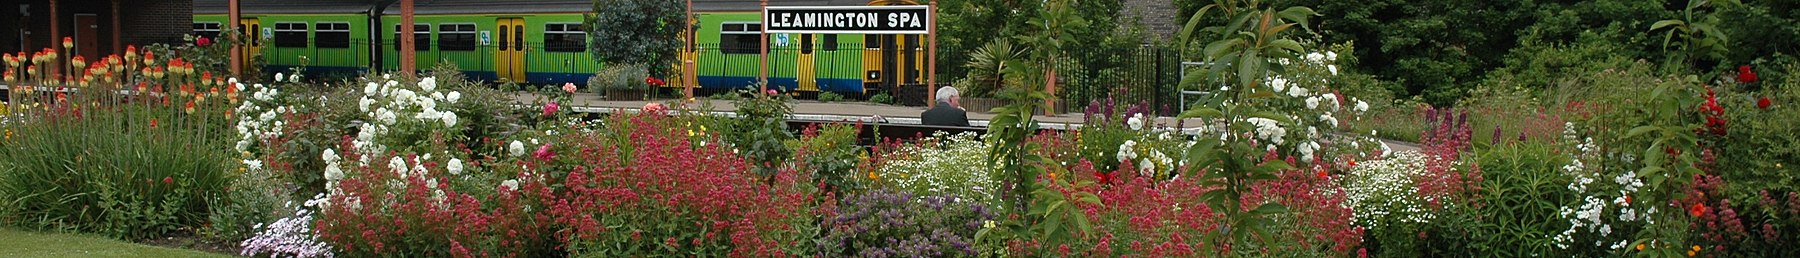 Leamington Spa банер Station Garden.JPG